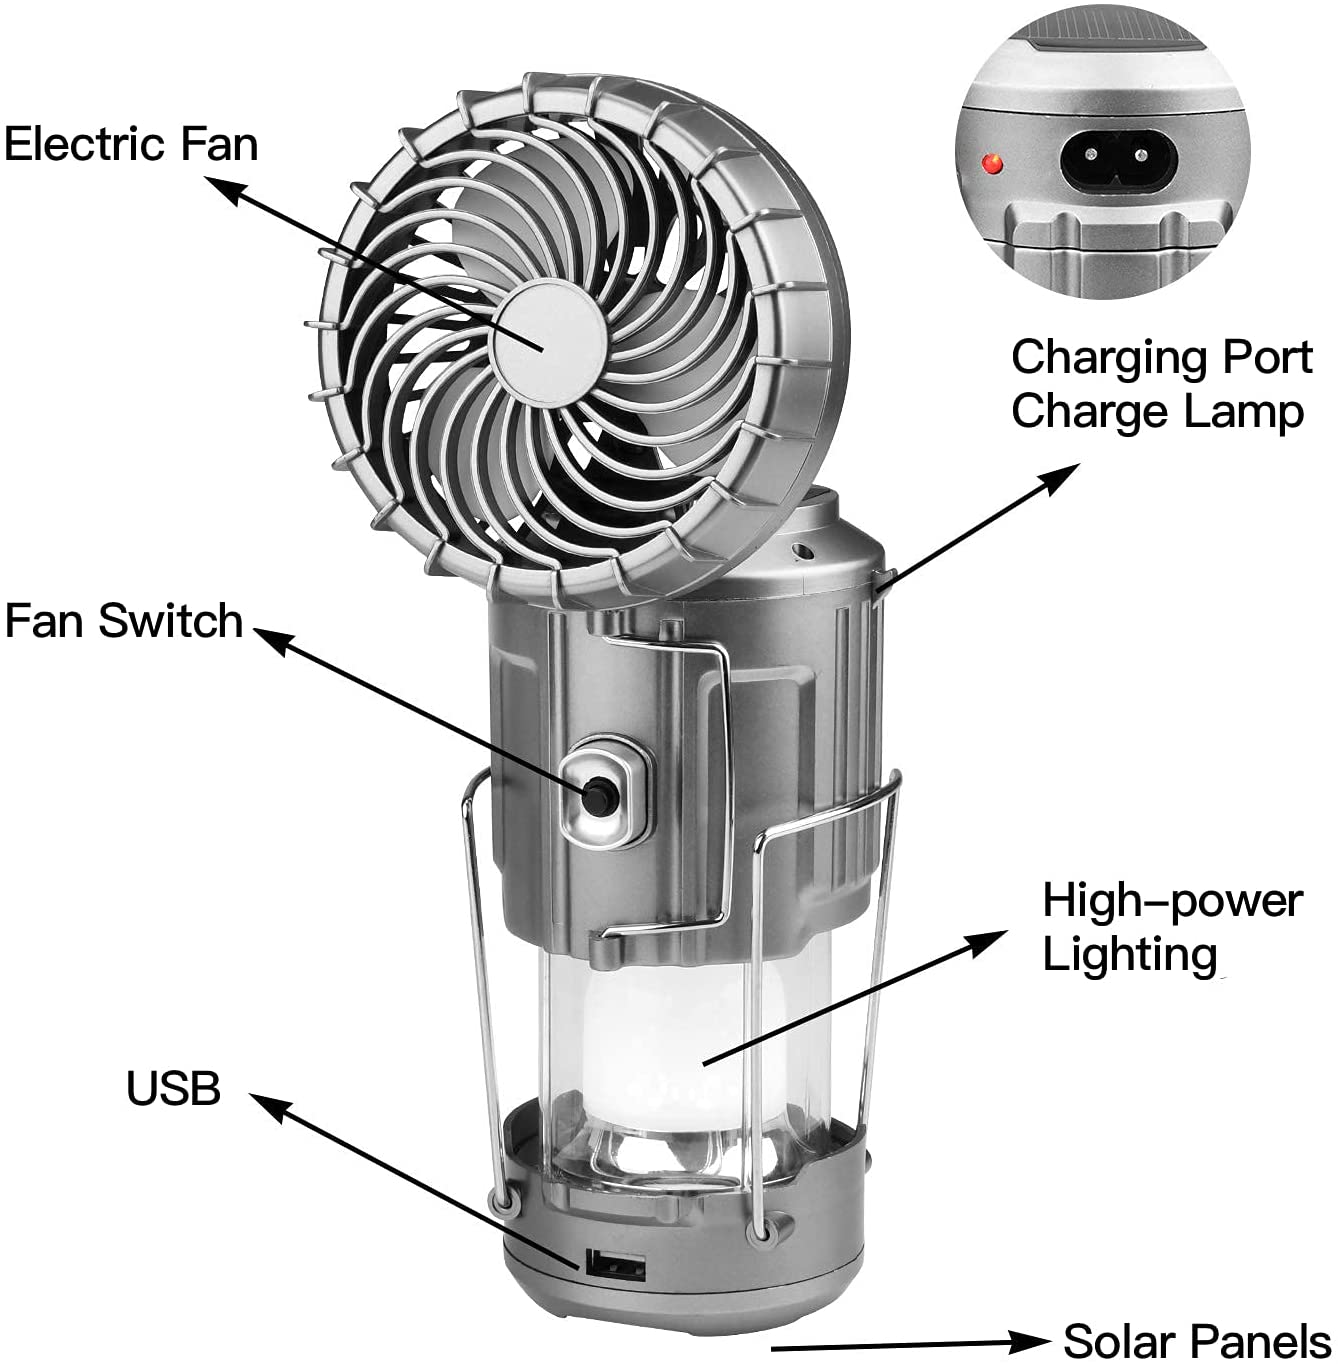 Portable Camping Lantern with fan - LINWEY - Best Portable Camping Lantern with fan